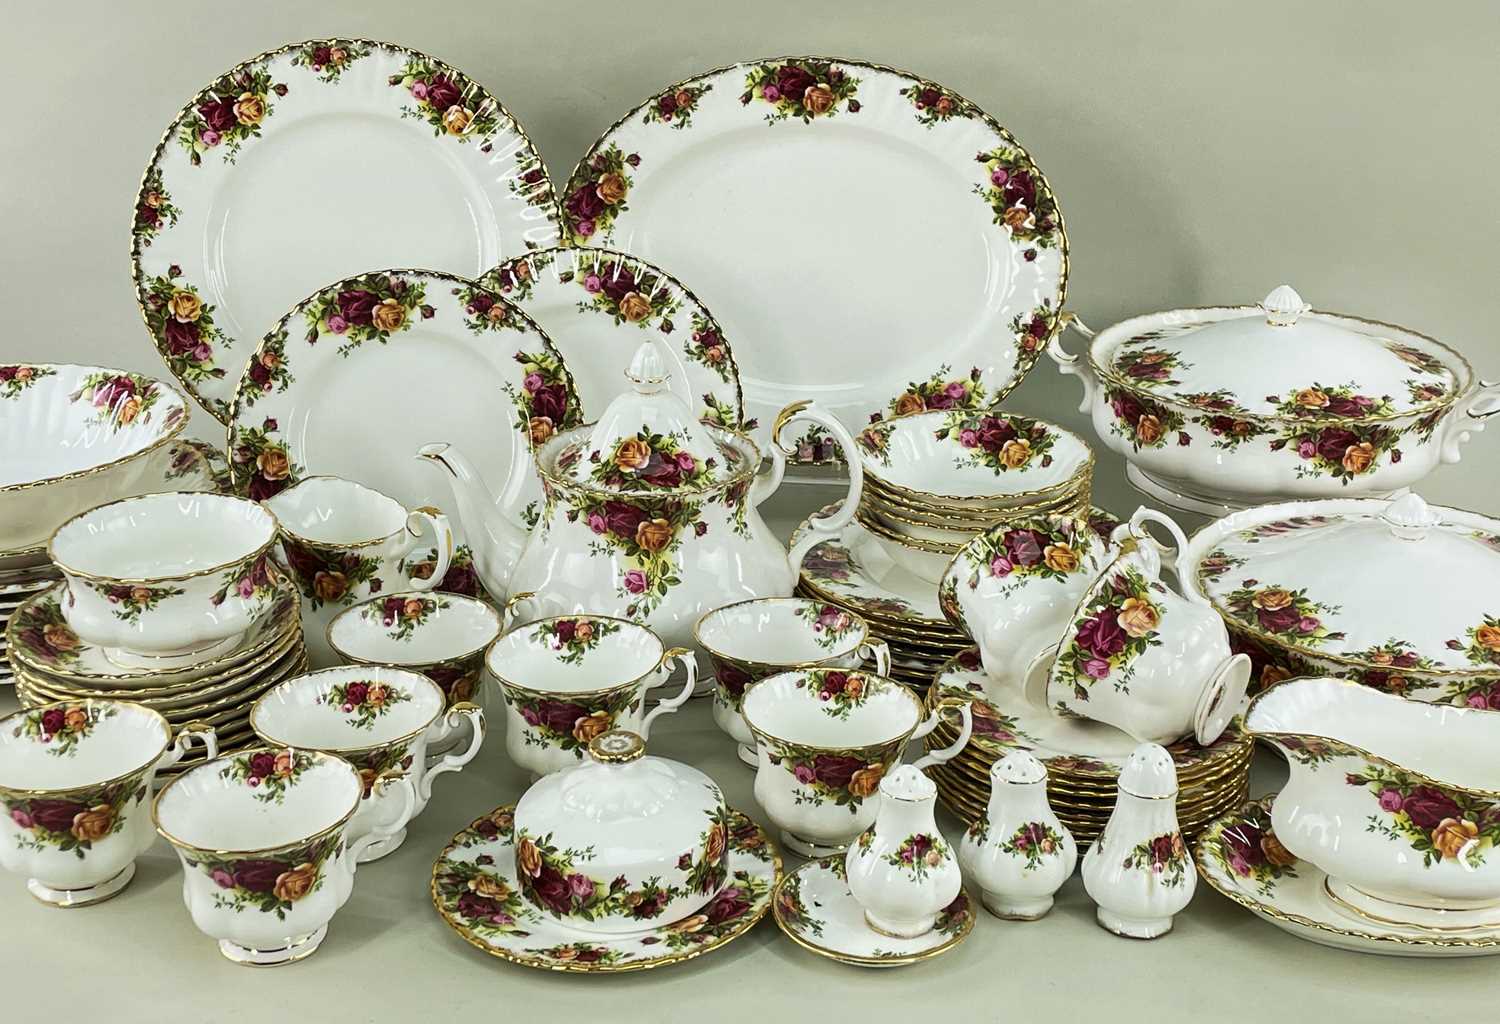 ROYAL ALBERT 'OLD COUNTRY ROSES' TEA & DINNER SERVICE, including teapot, sugar bowl, milk jug, bread